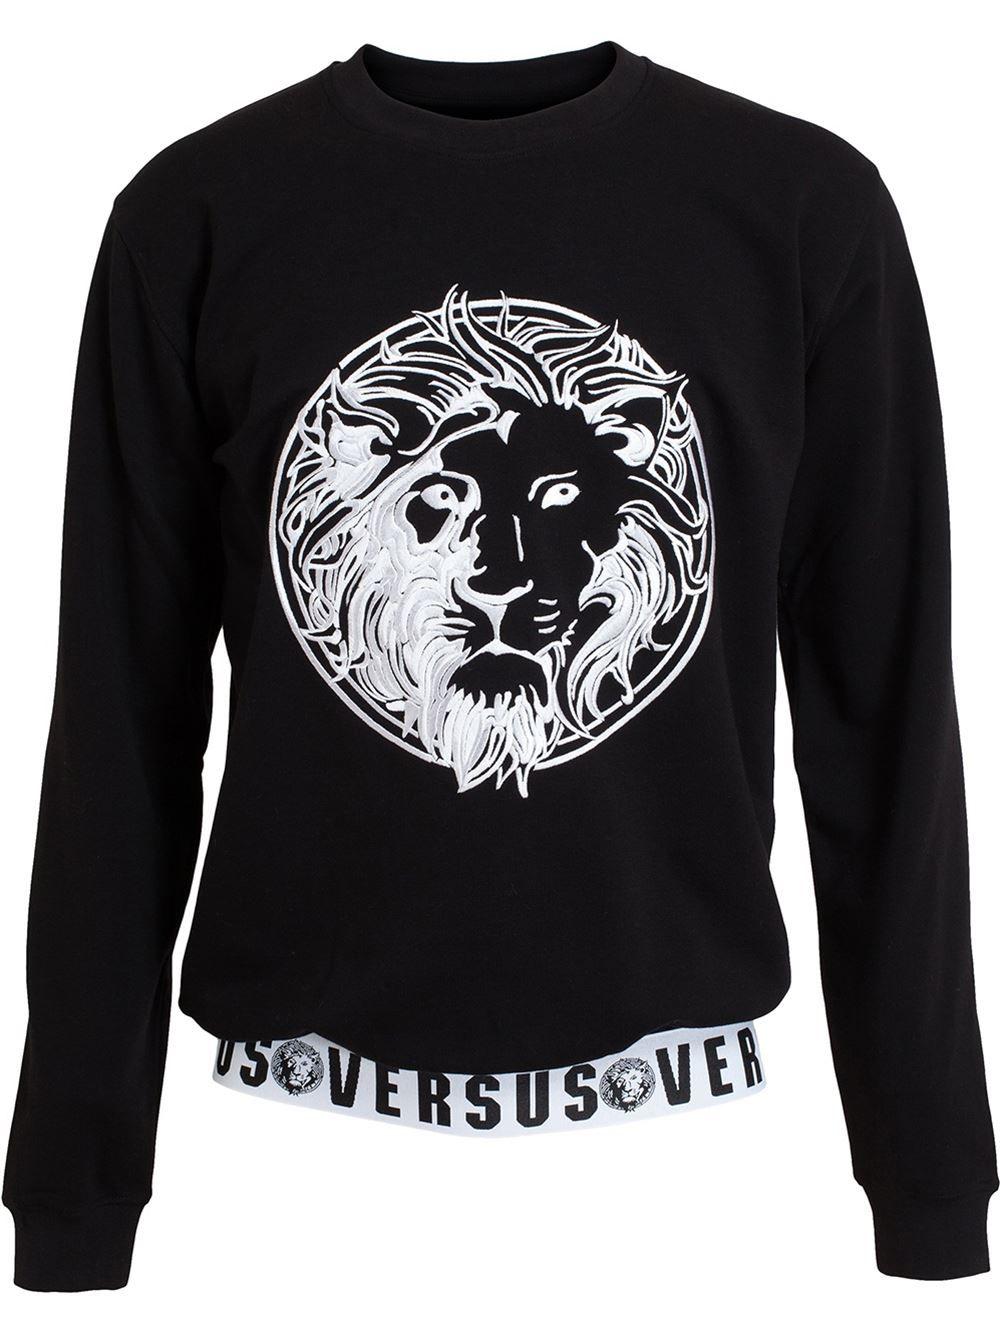 Clothing with Lion Logo - Lyst Lion Logo Sweatshirt in Black